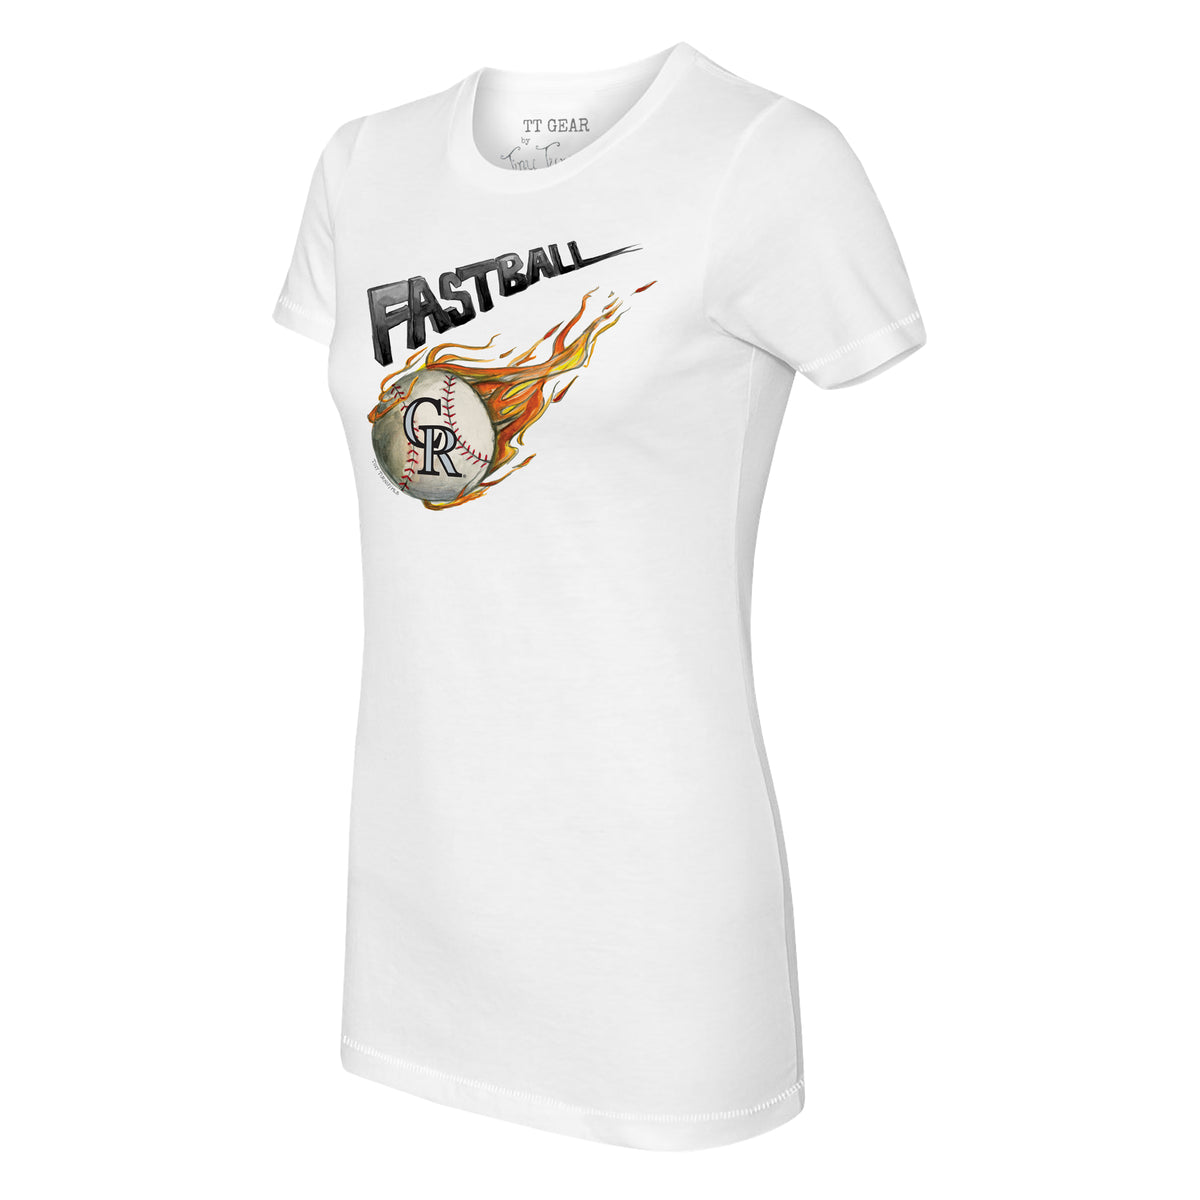 Colorado Rockies Fastball Tee Shirt